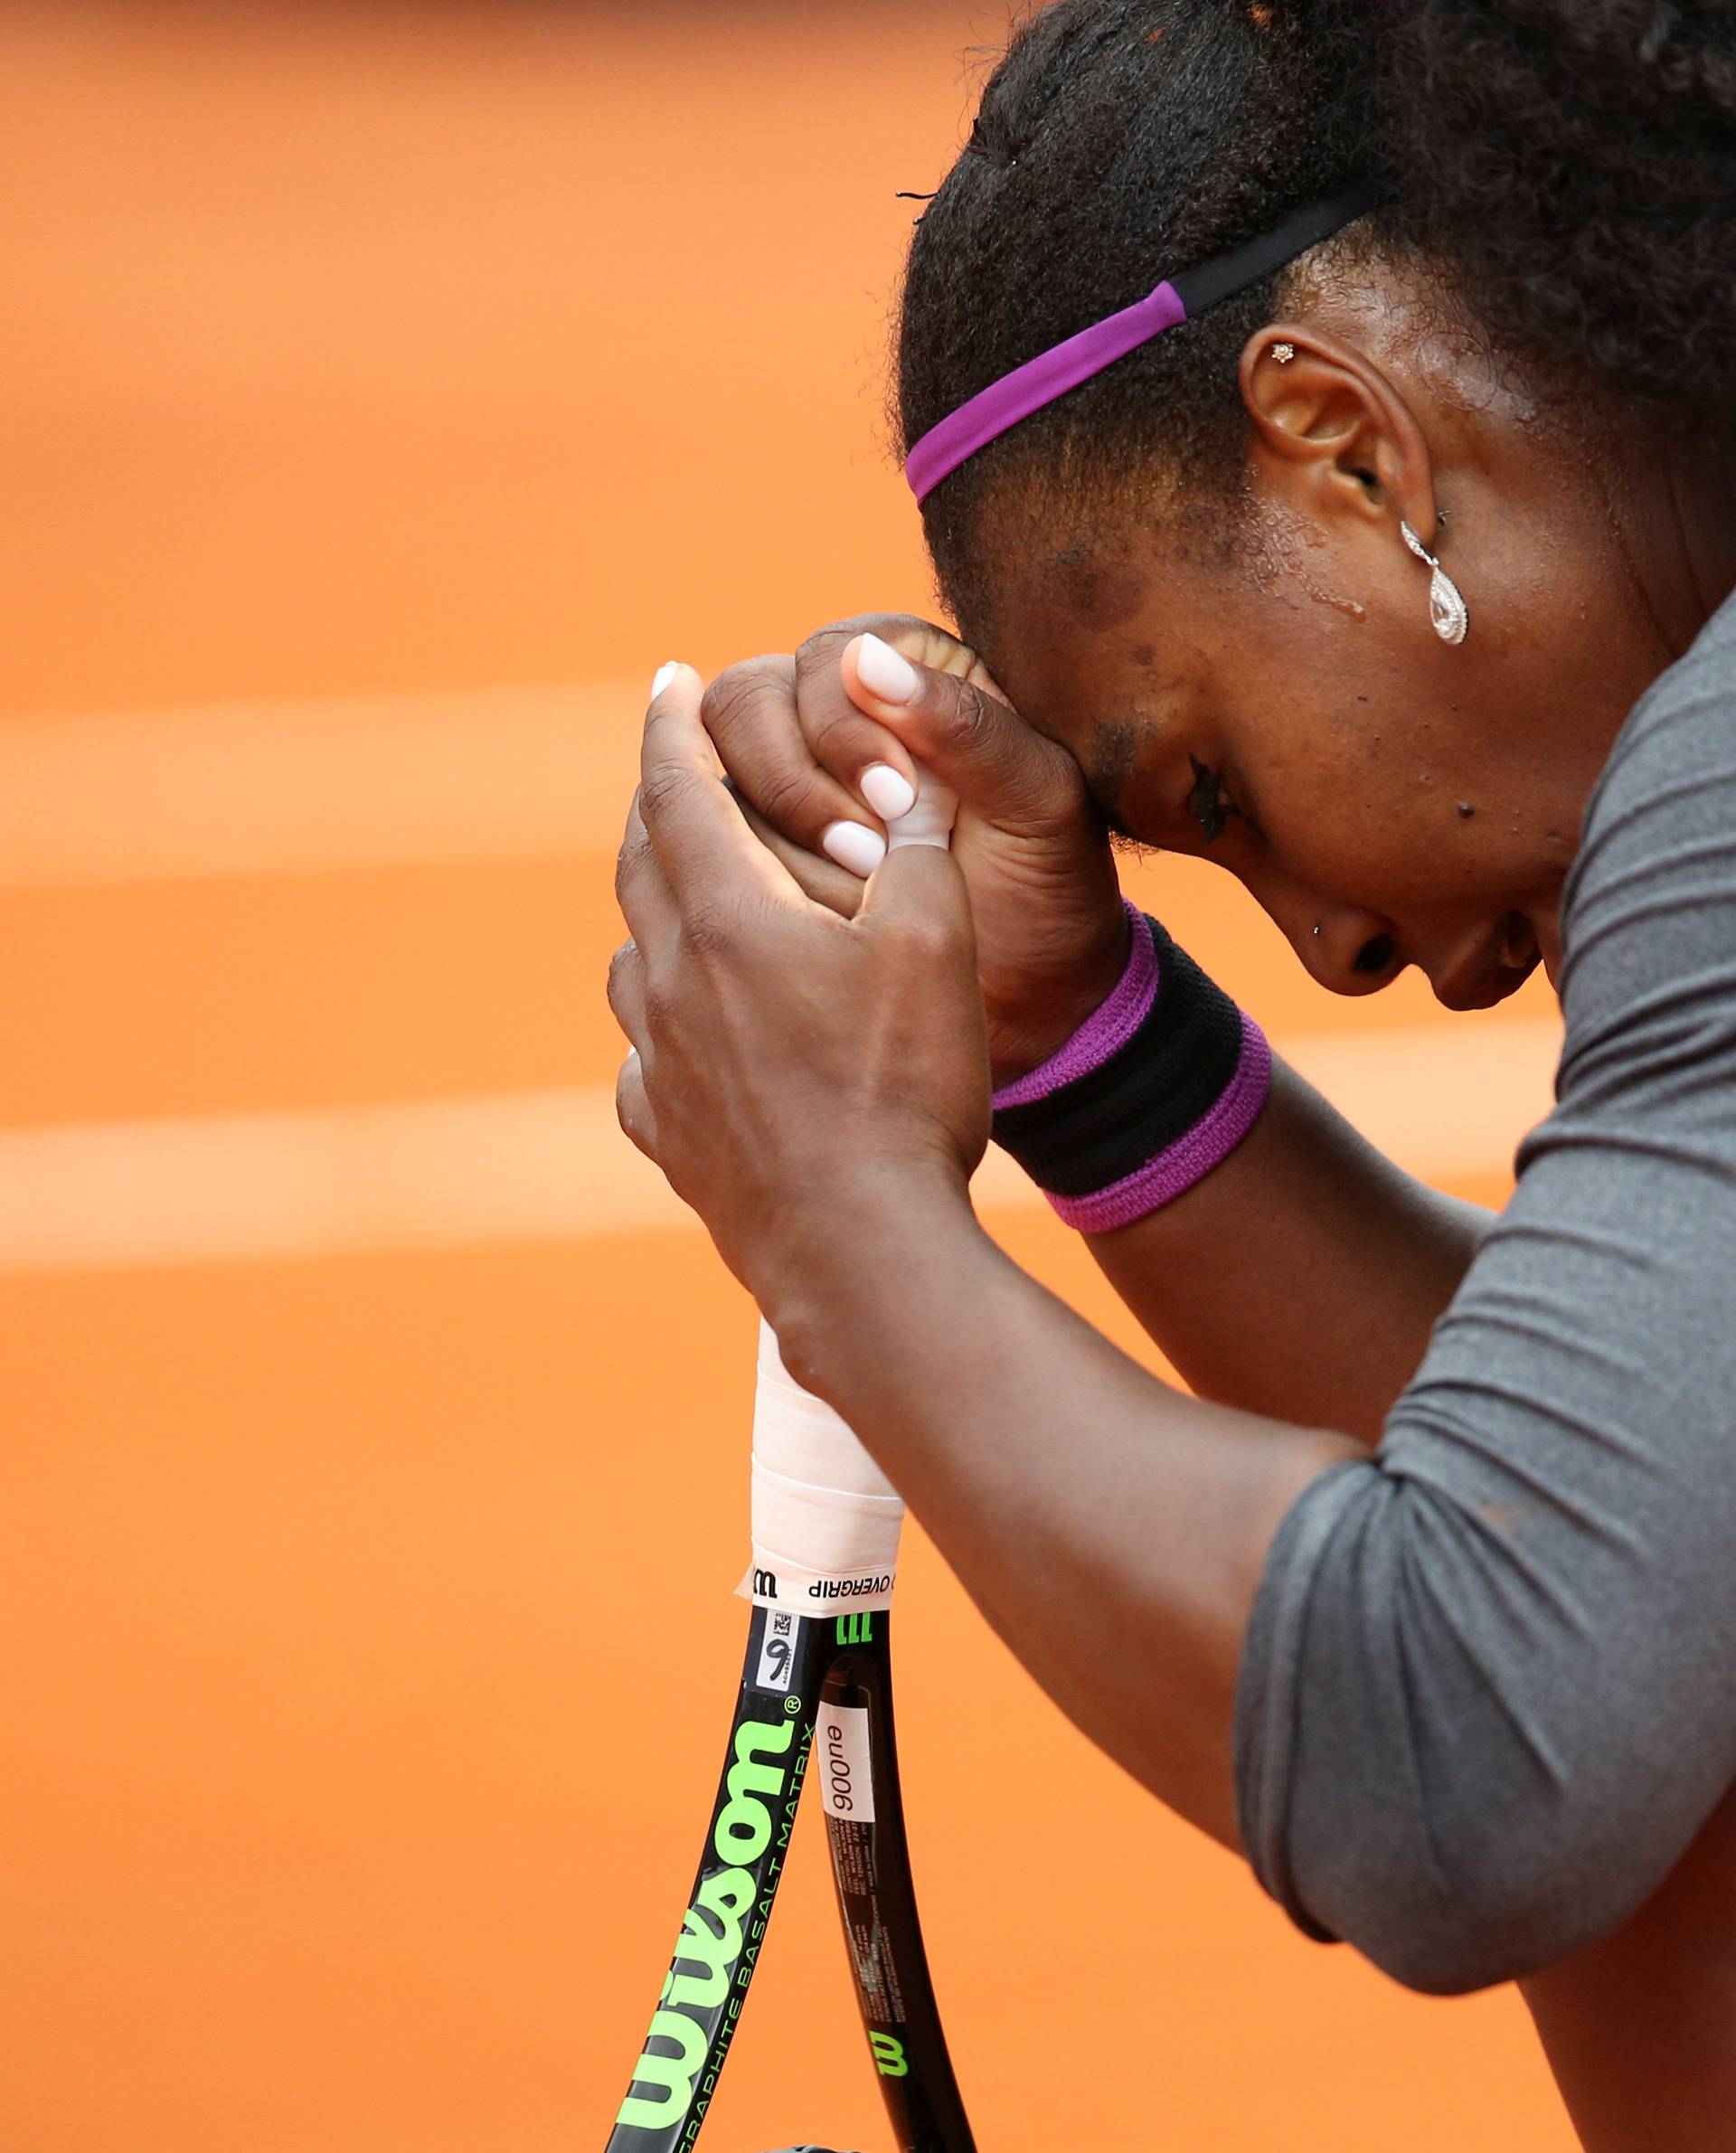 Tennis - Italy Open Women's Singles Final match - Serena Williams of the U.S. v Madison Keys of U.S. - Rome, Italy